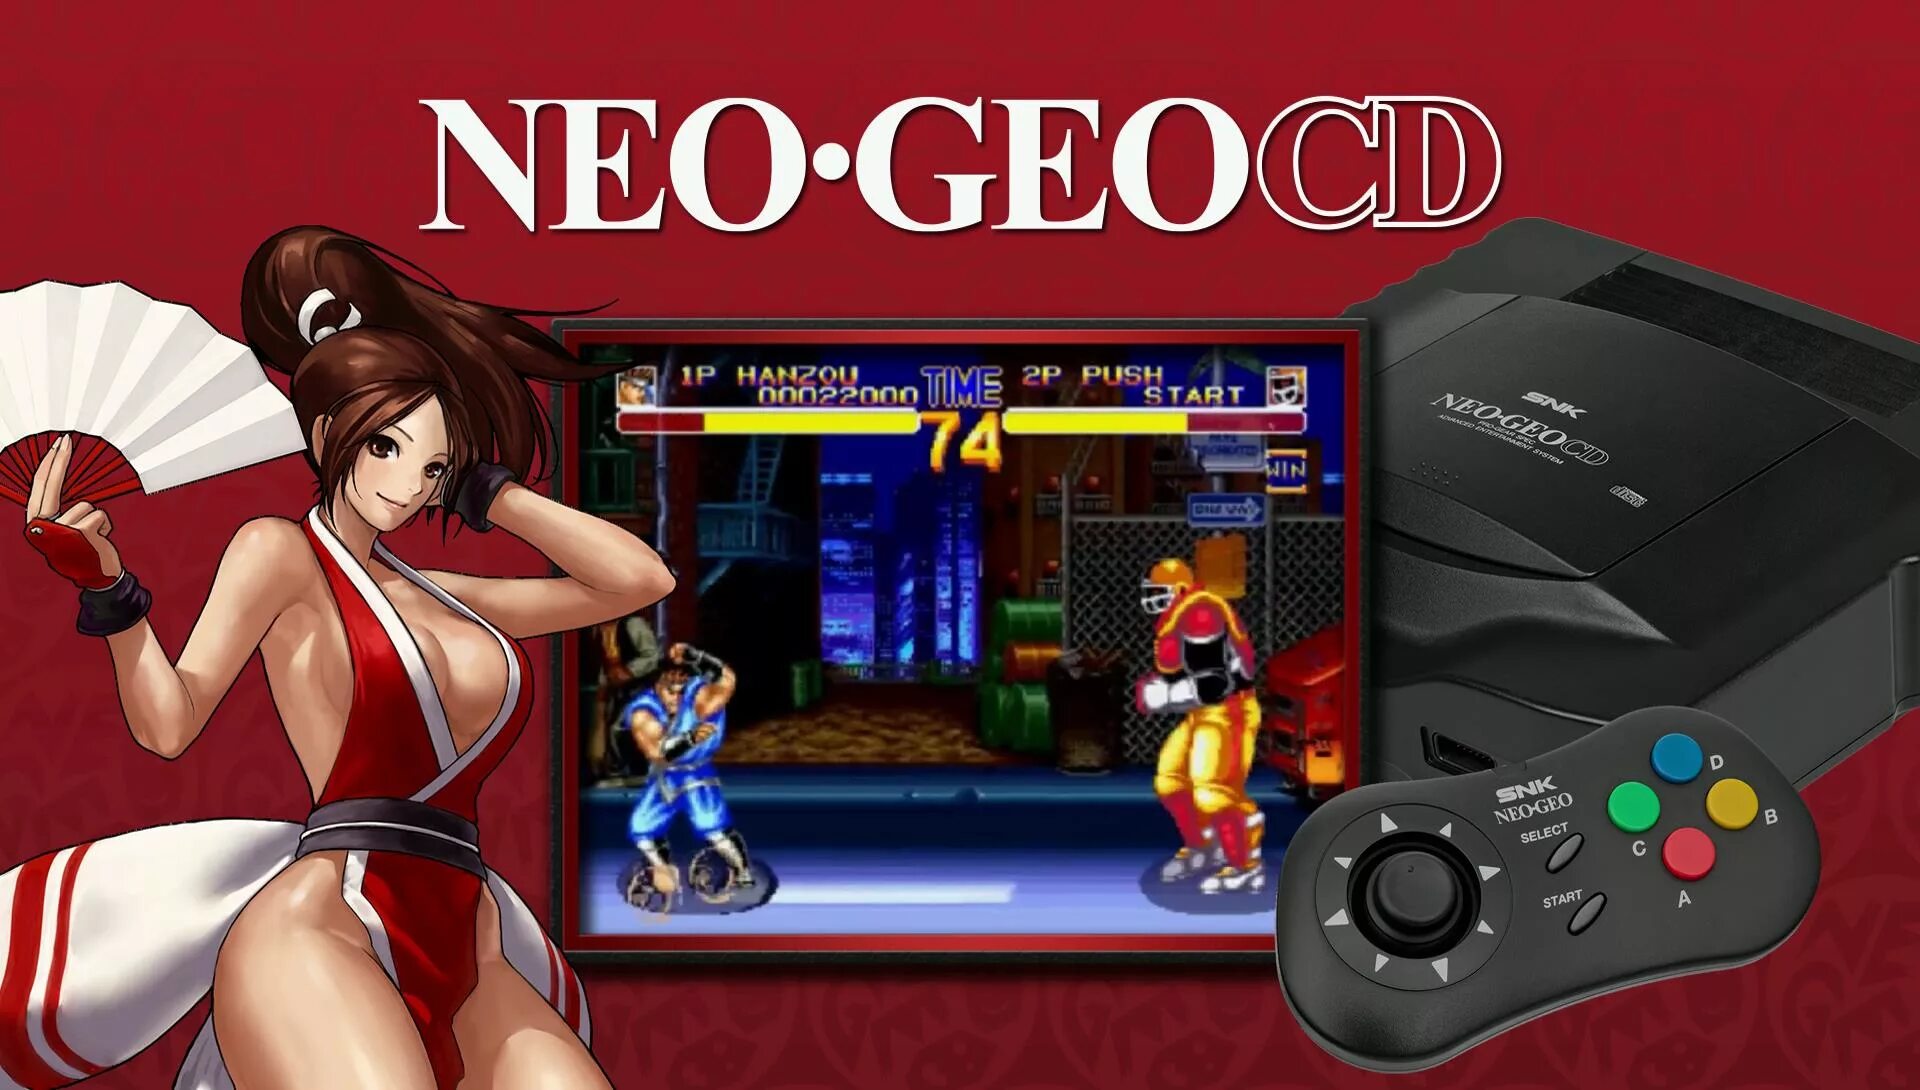 Ardor gaming ally alg41288. SNK Neo geo. Neo geo CD. Neo geo игры. Файтинги Neo-geo.